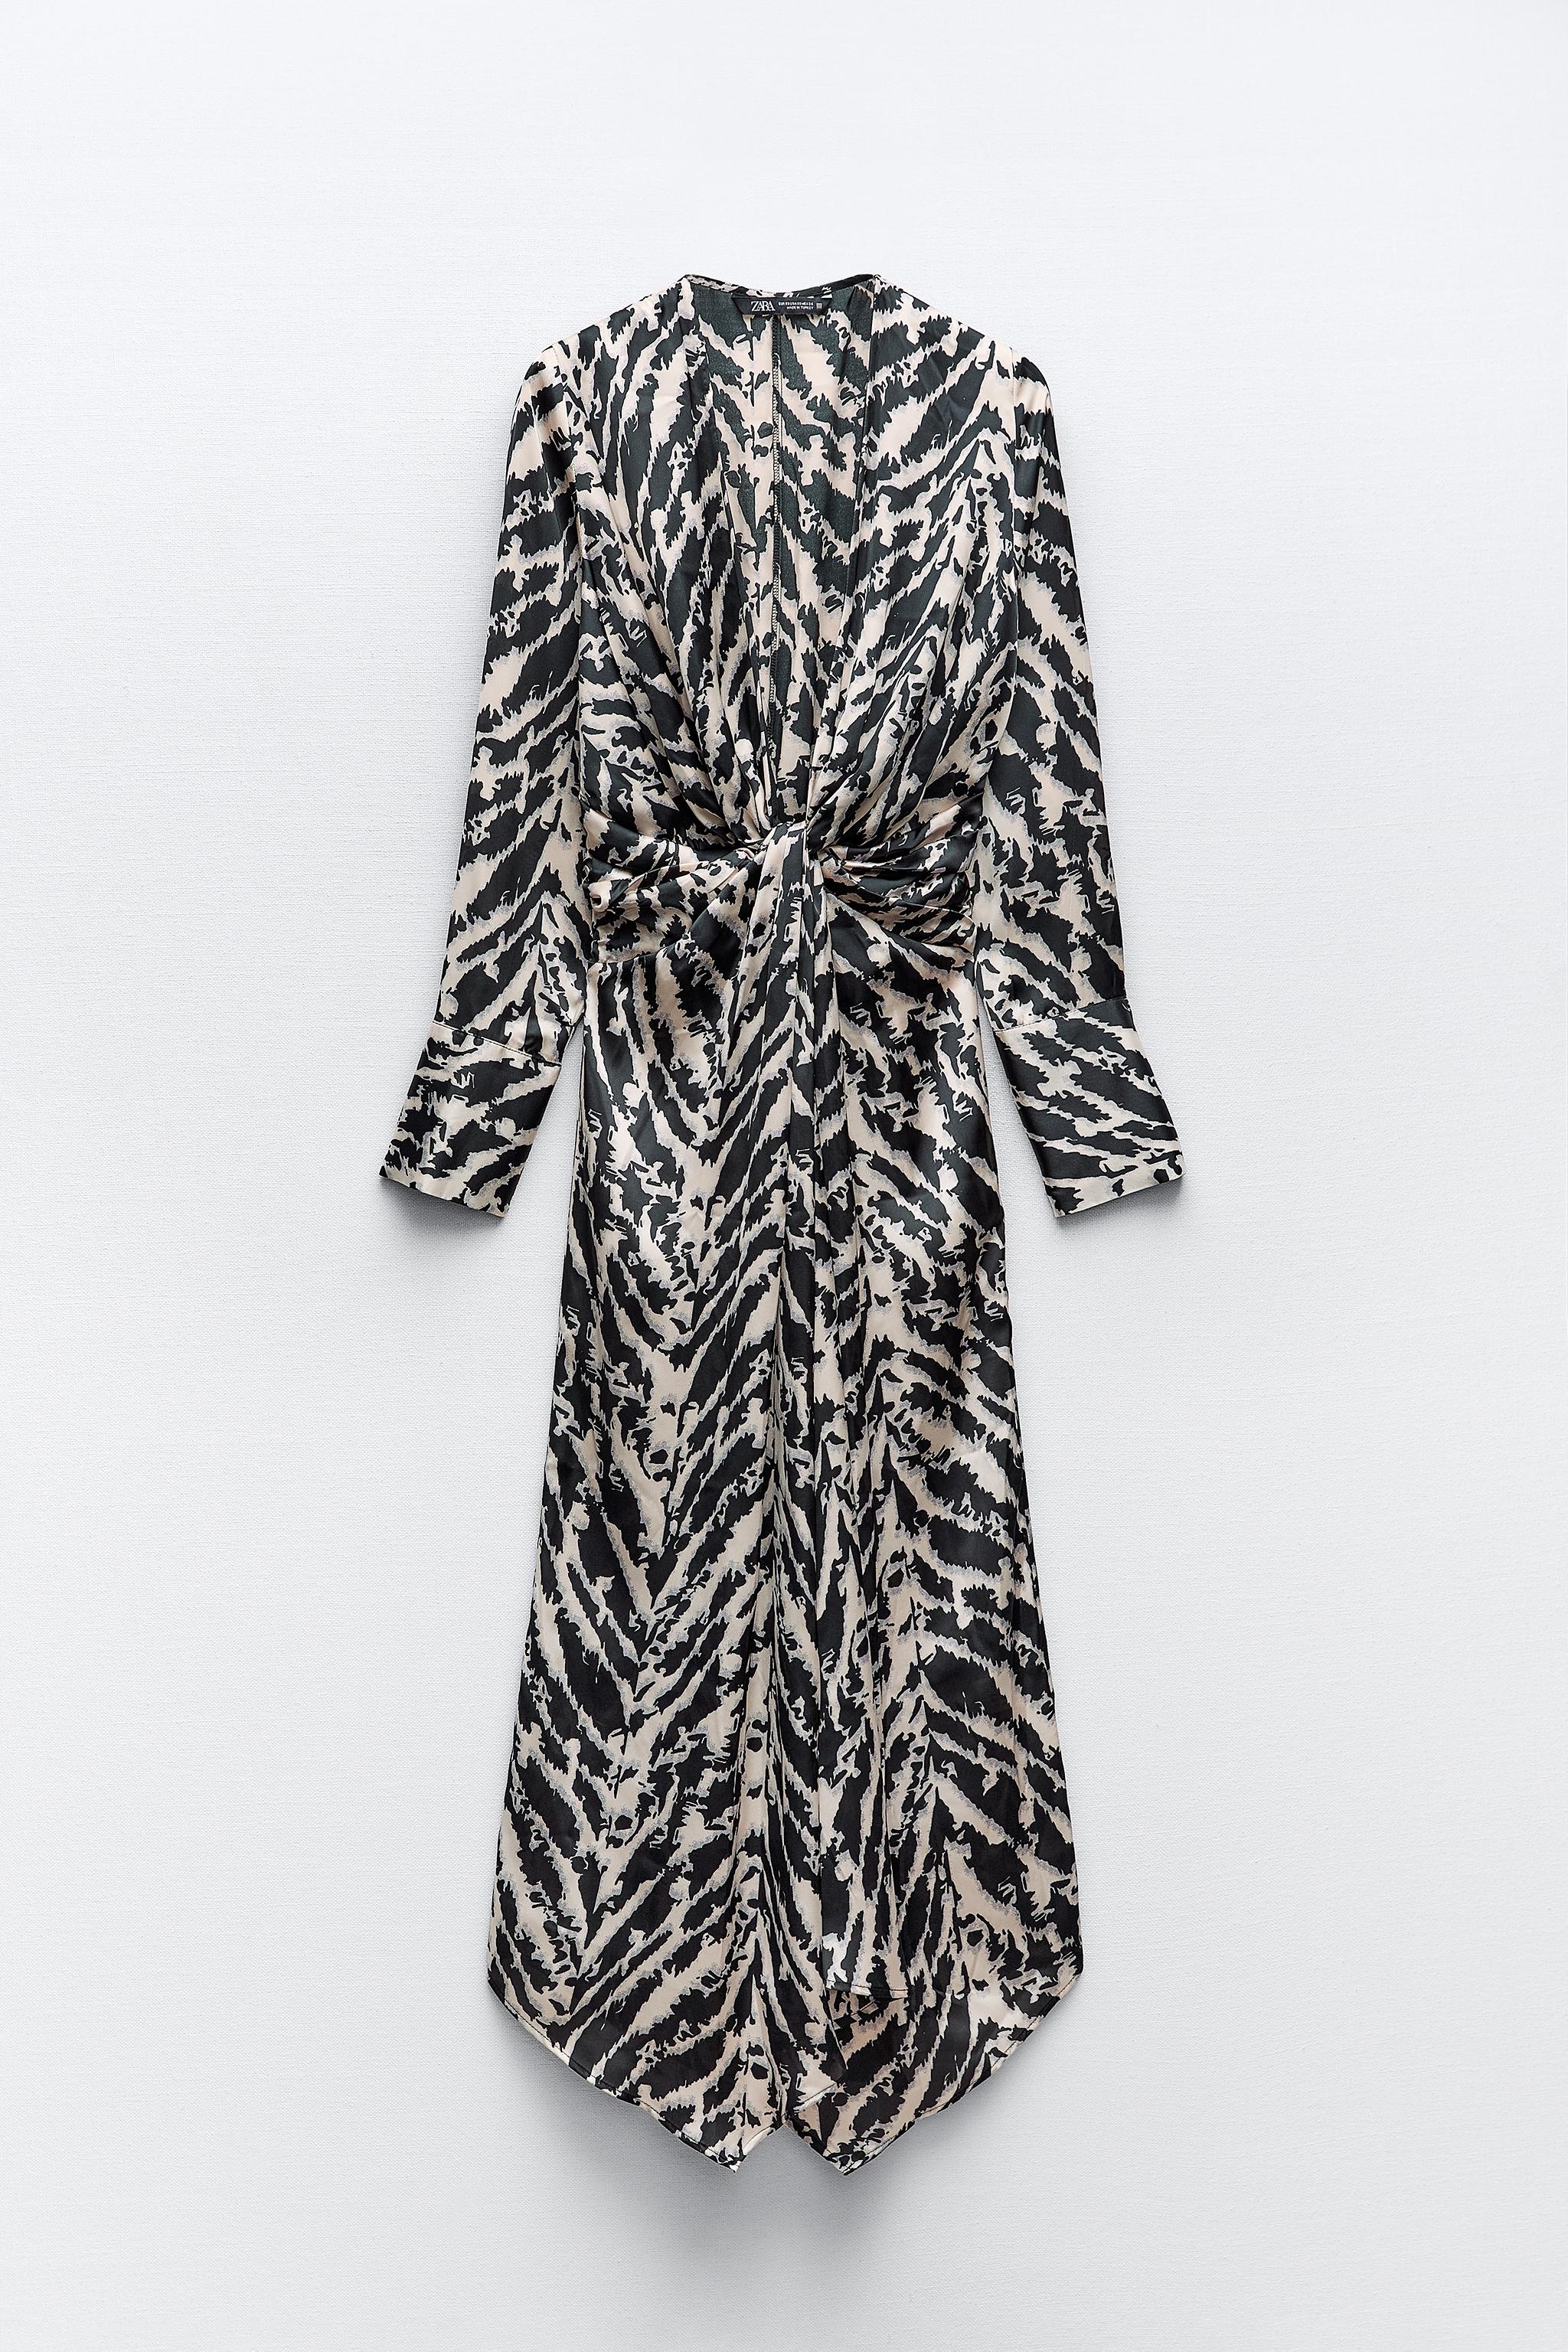 Zara Festive Days sequin dress size M Leopard print